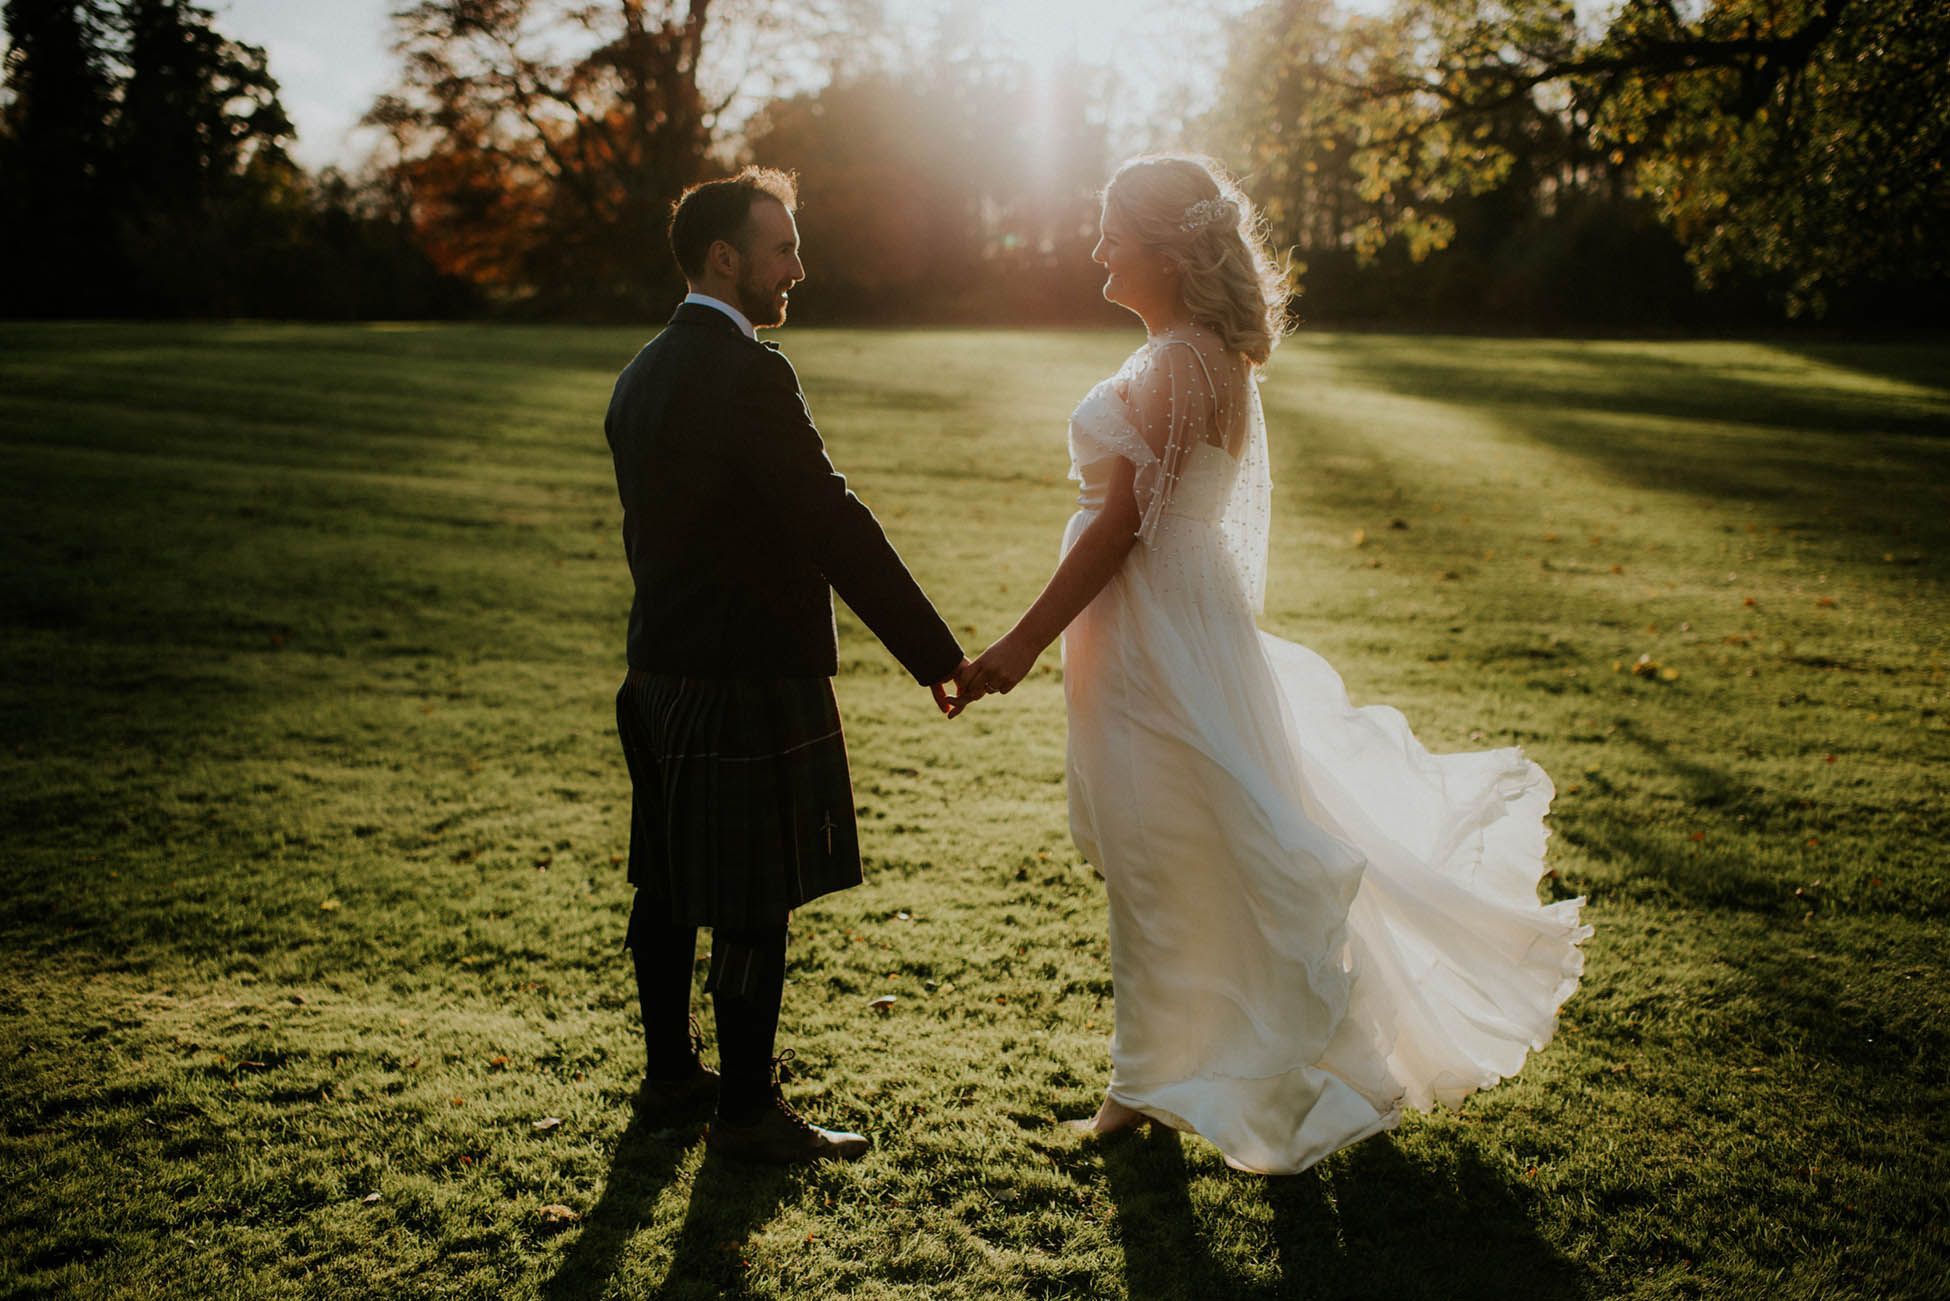 SimonsStudio wedding photography Glasgow